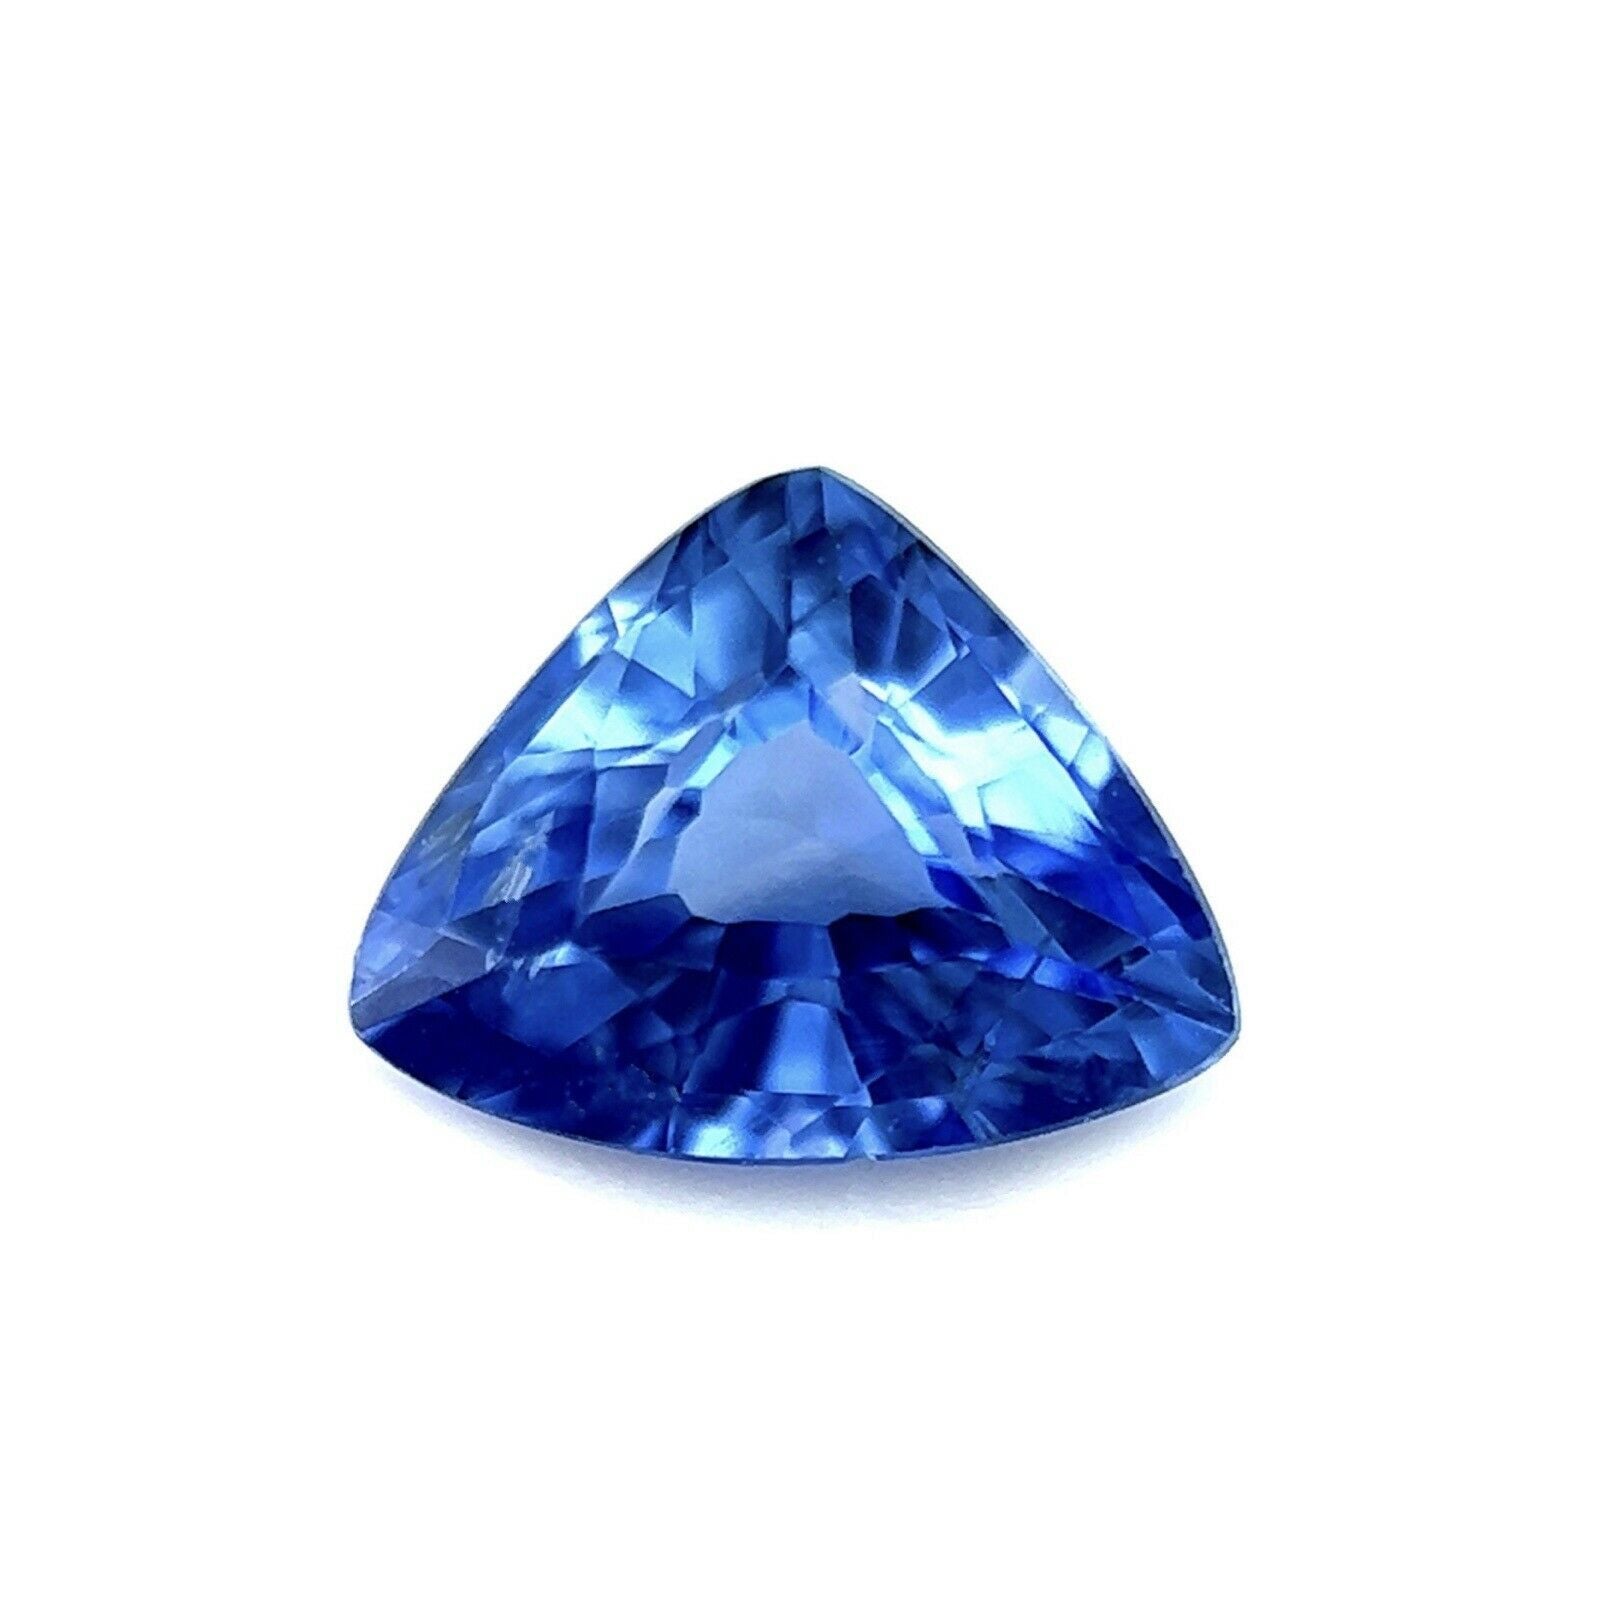 Vivid Ceylon Cornflower Blue Sapphire 0.79ct Trillion Triangle Cut Gem 6.4x5mm For Sale